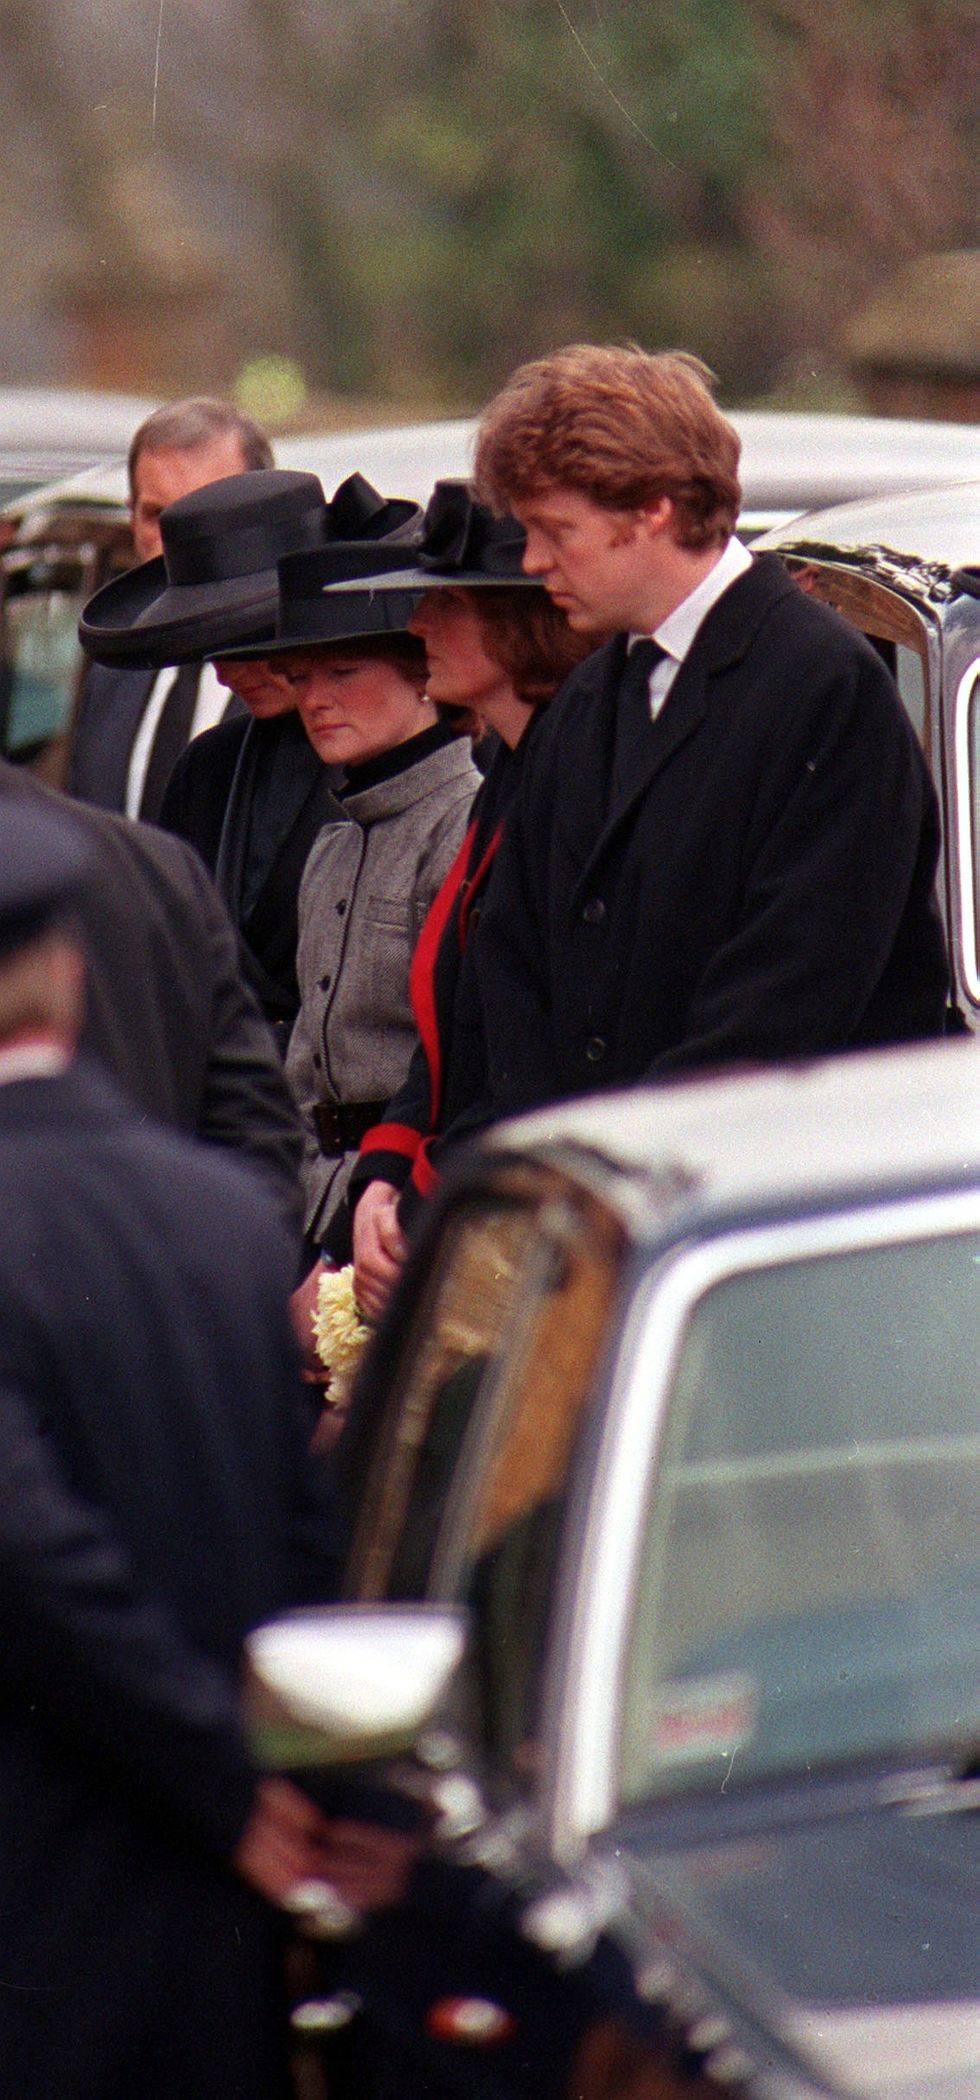 Princess Diana and Charles Spencer